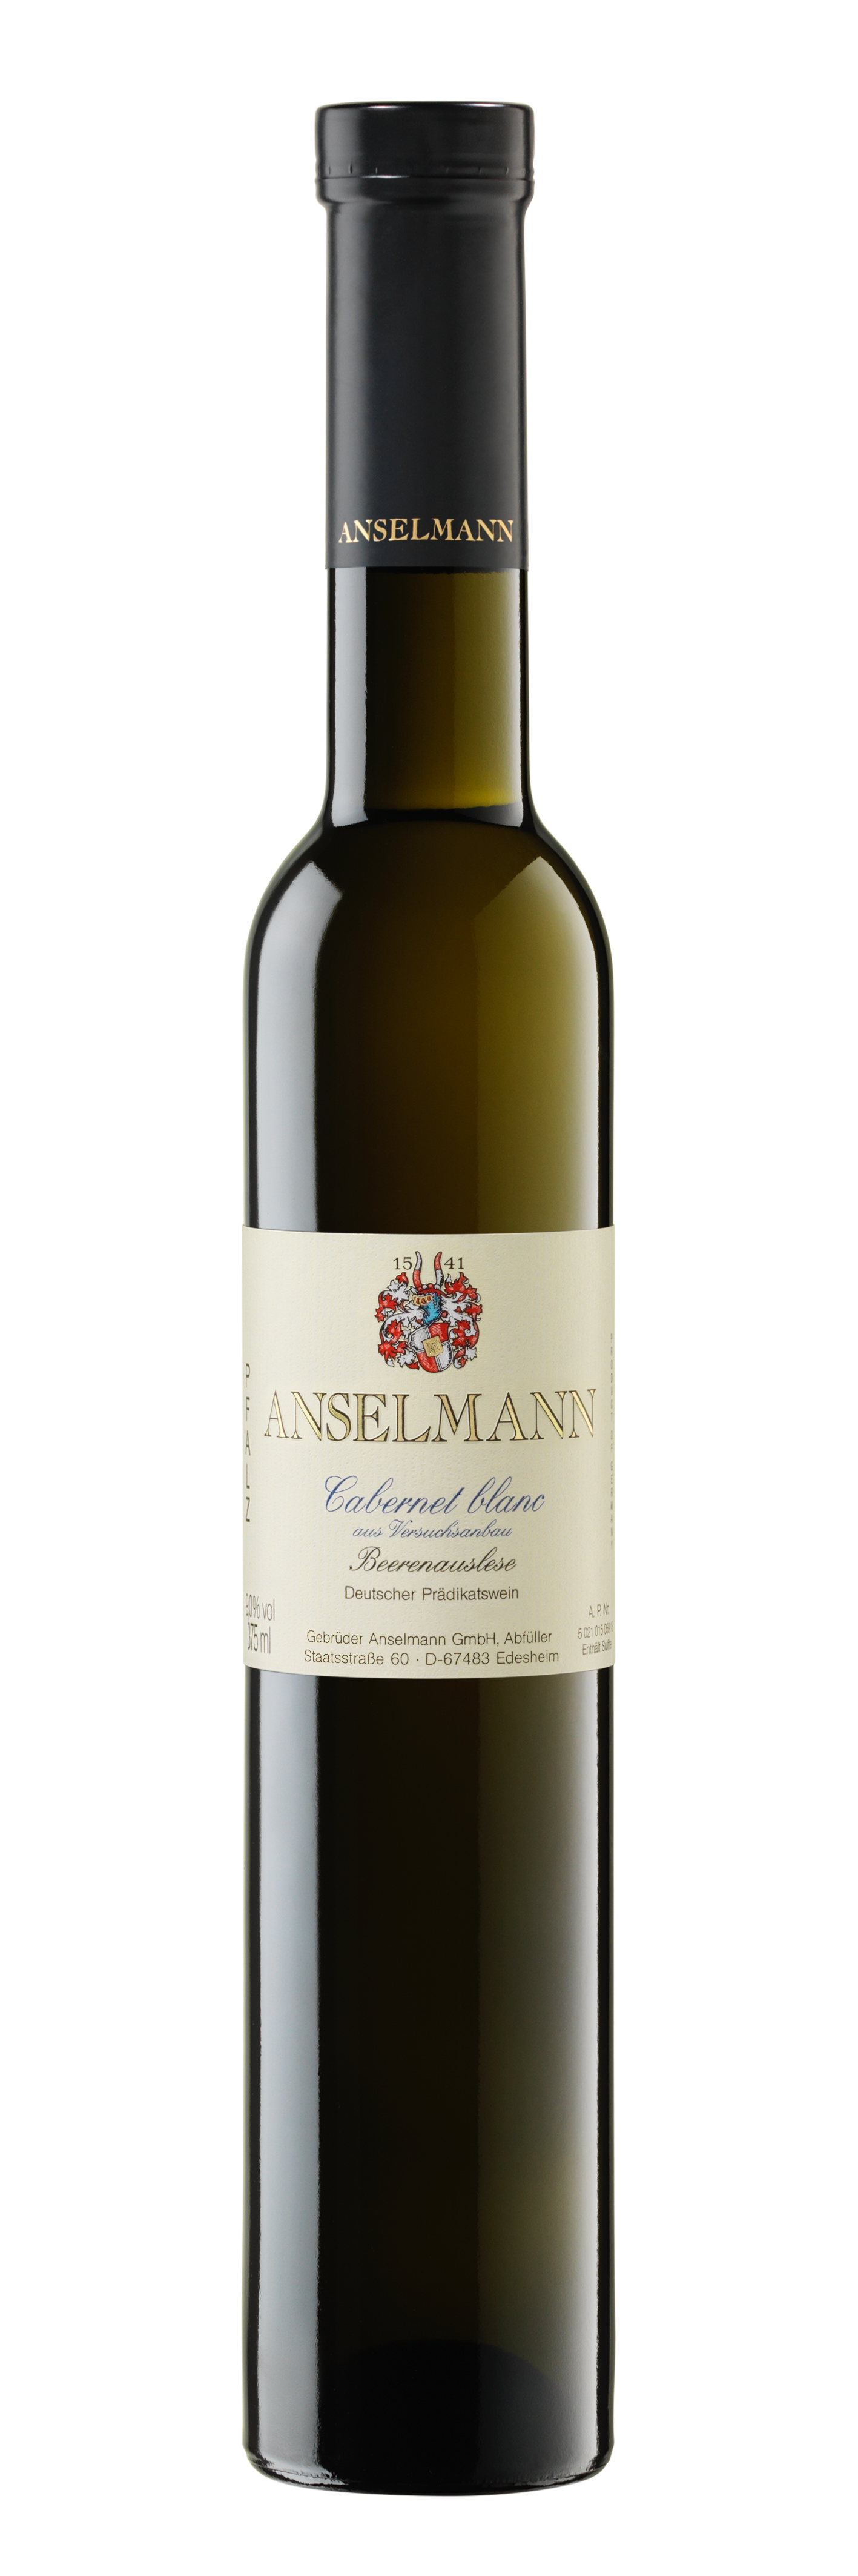 2012 Cabernet Blanc Beerenauslese edelsüss 0,375 L - Weingut Anselmann